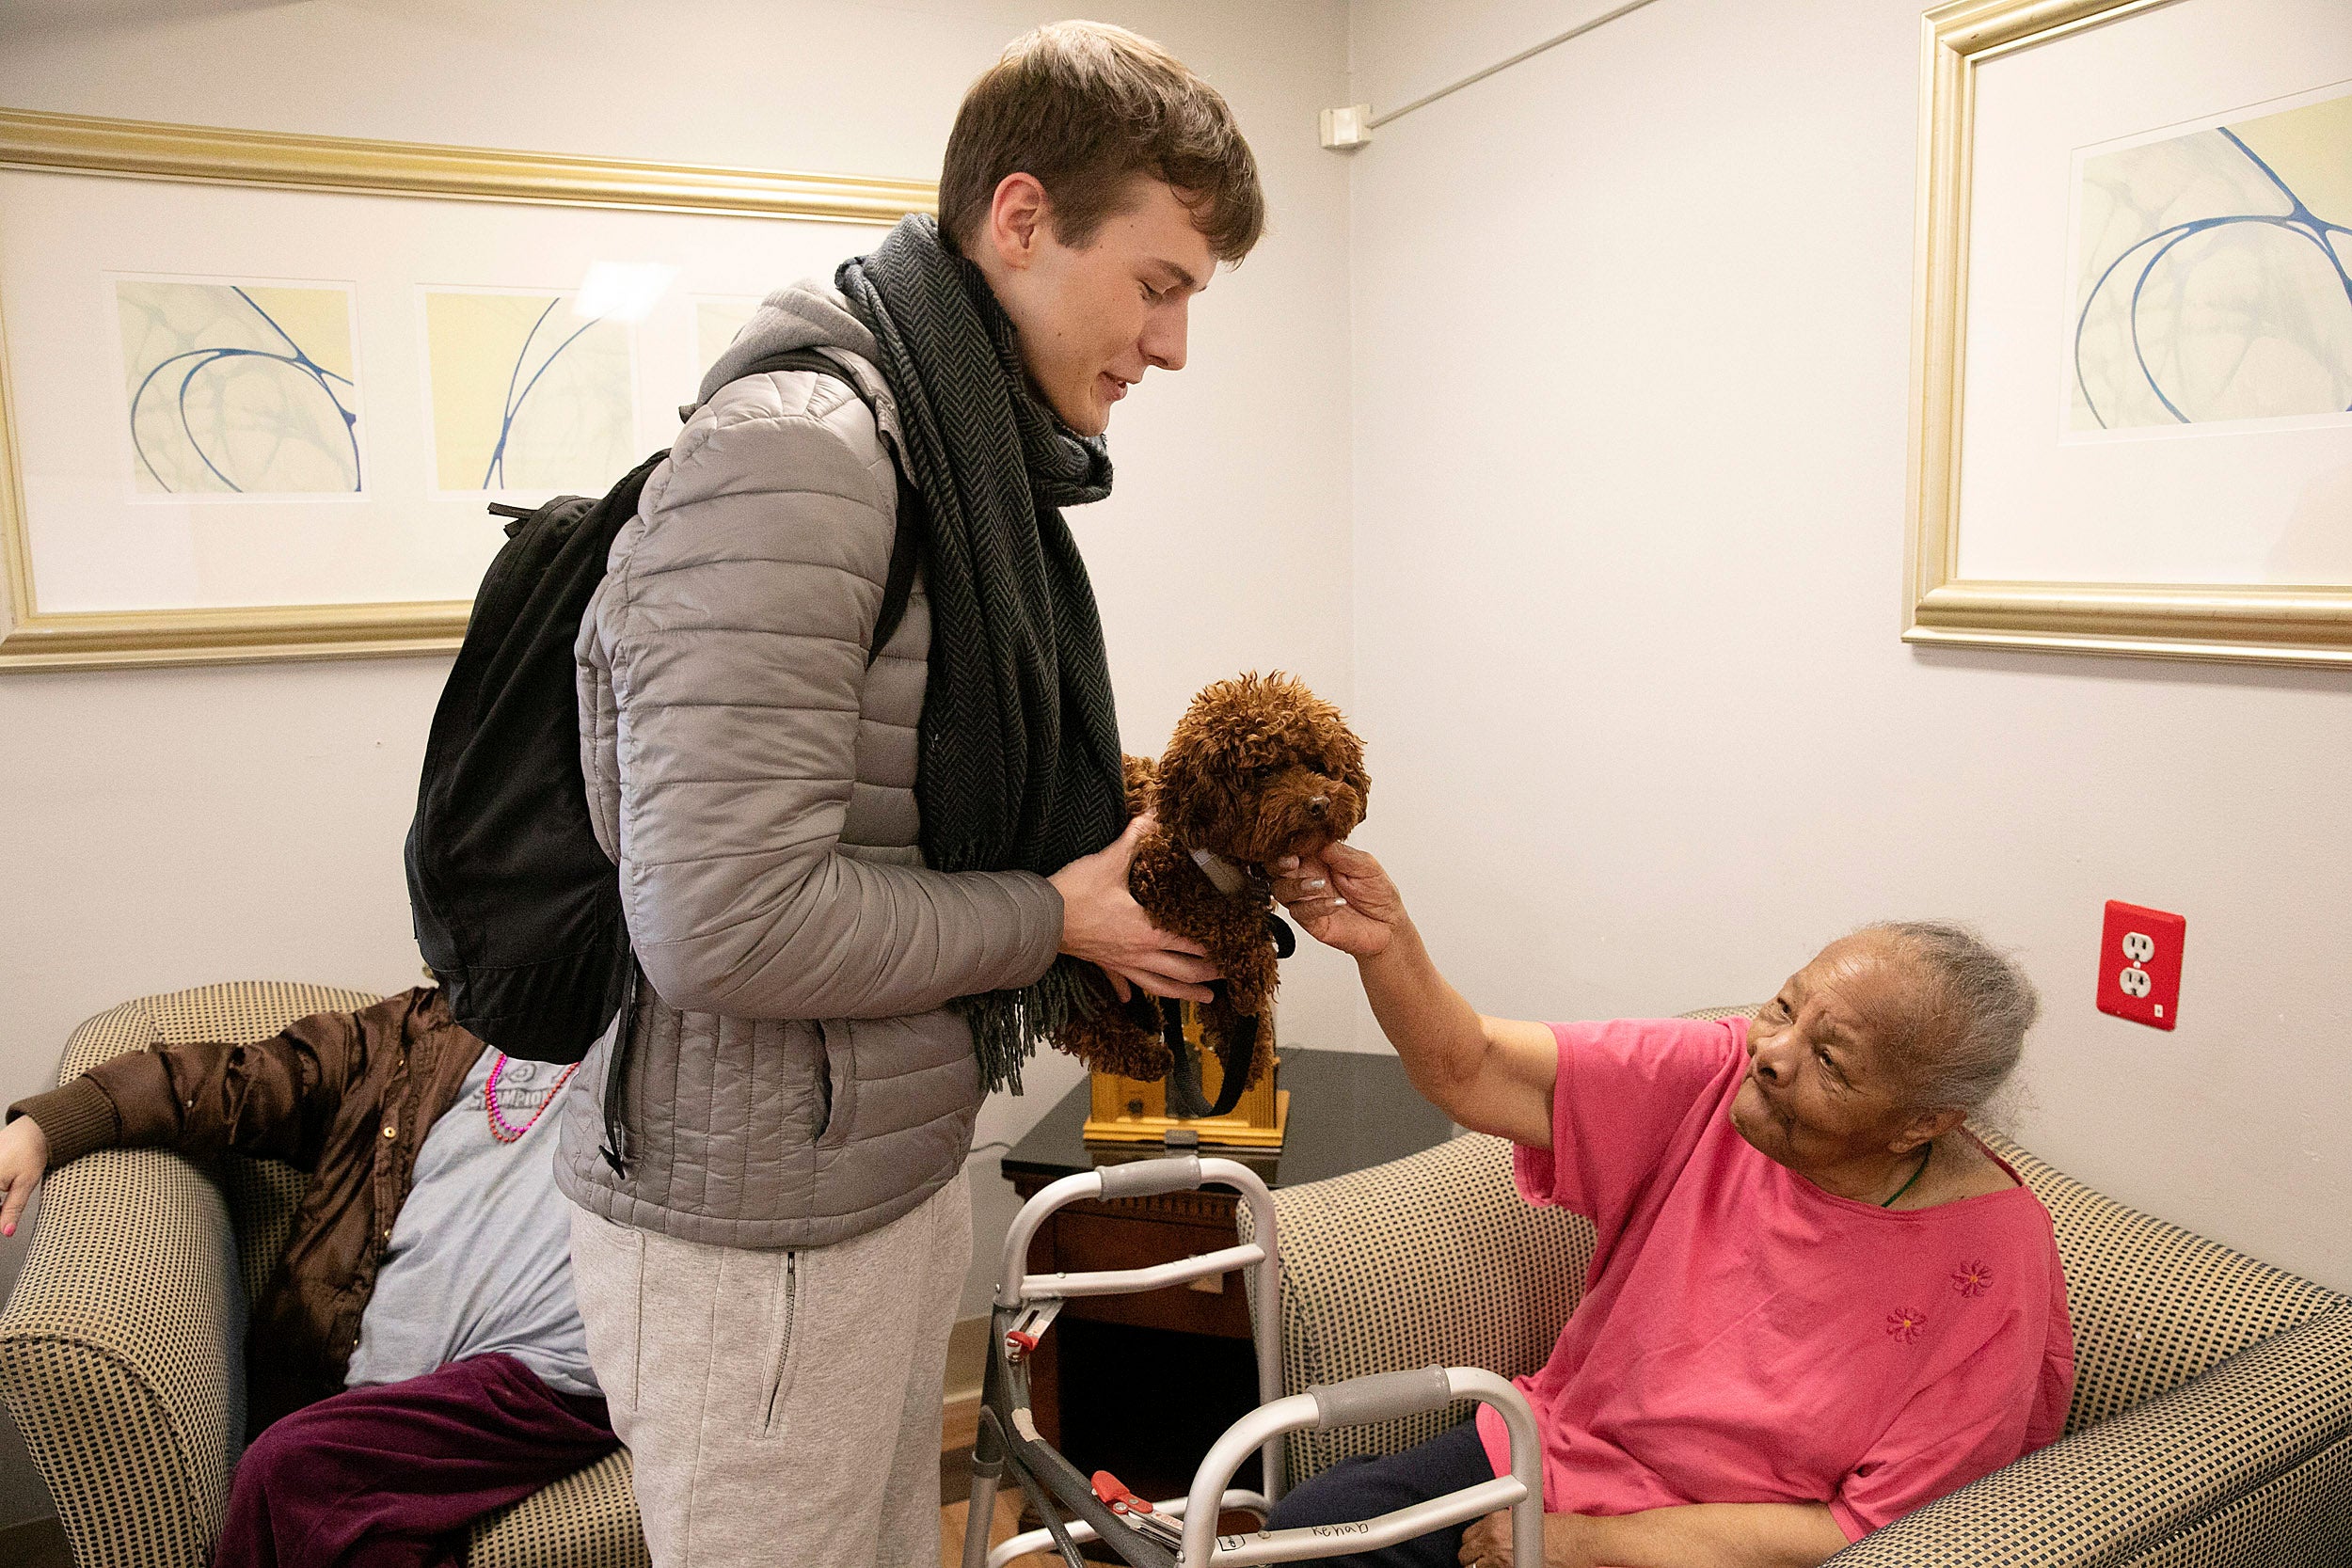 Student holds dog while elderly woman pat dog.